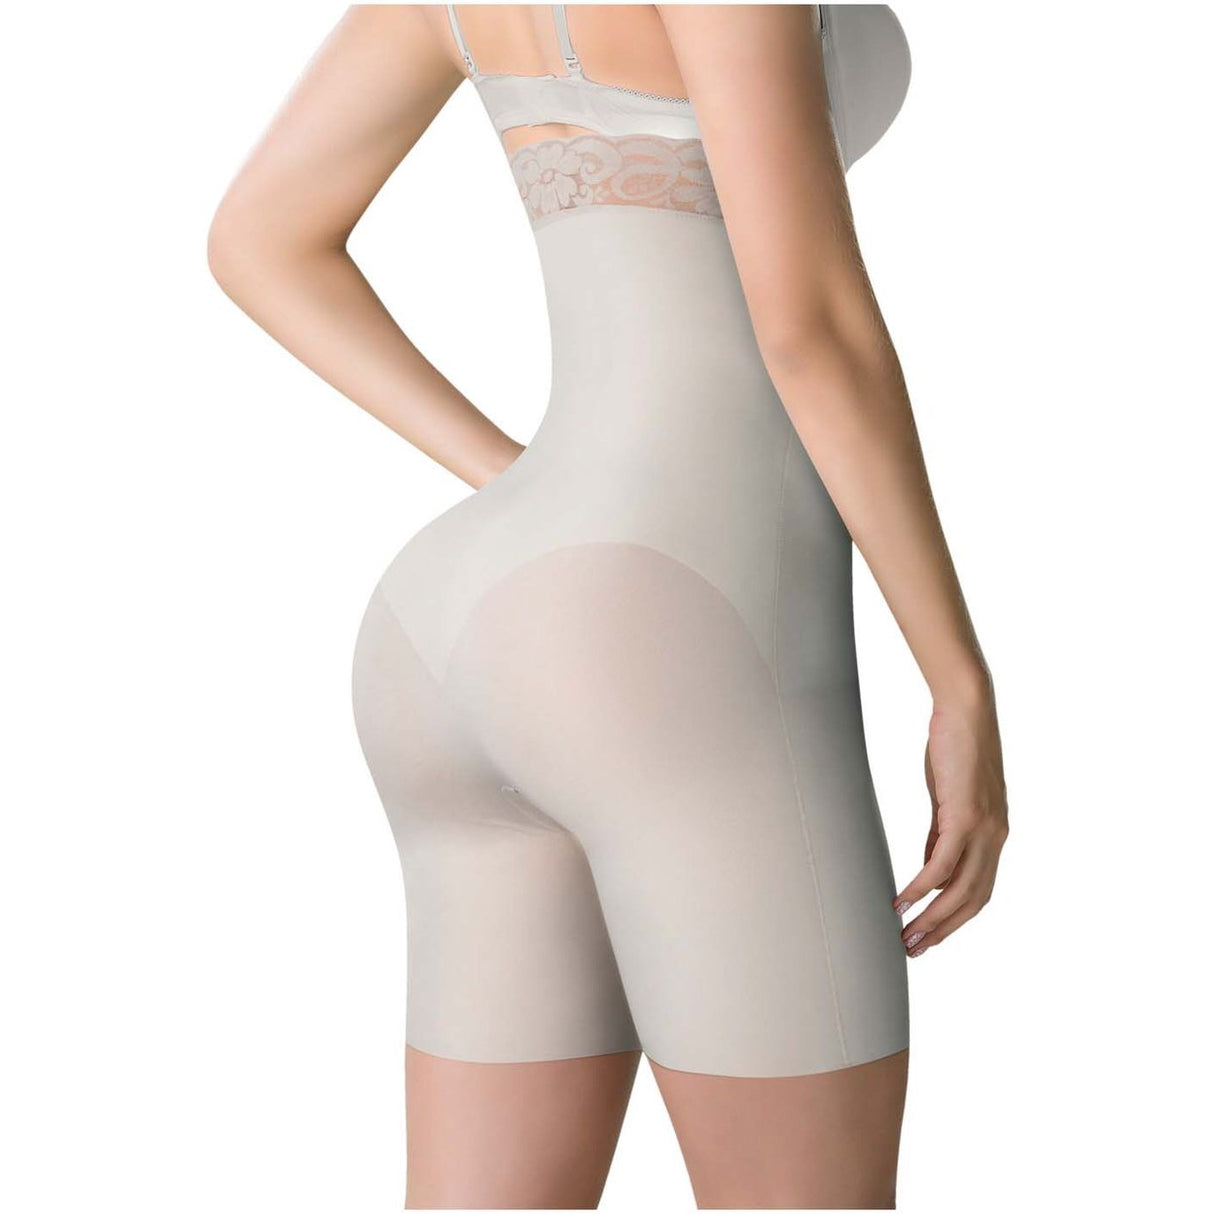 Liposuction full body garment , 3 sizes in one #1 seller By